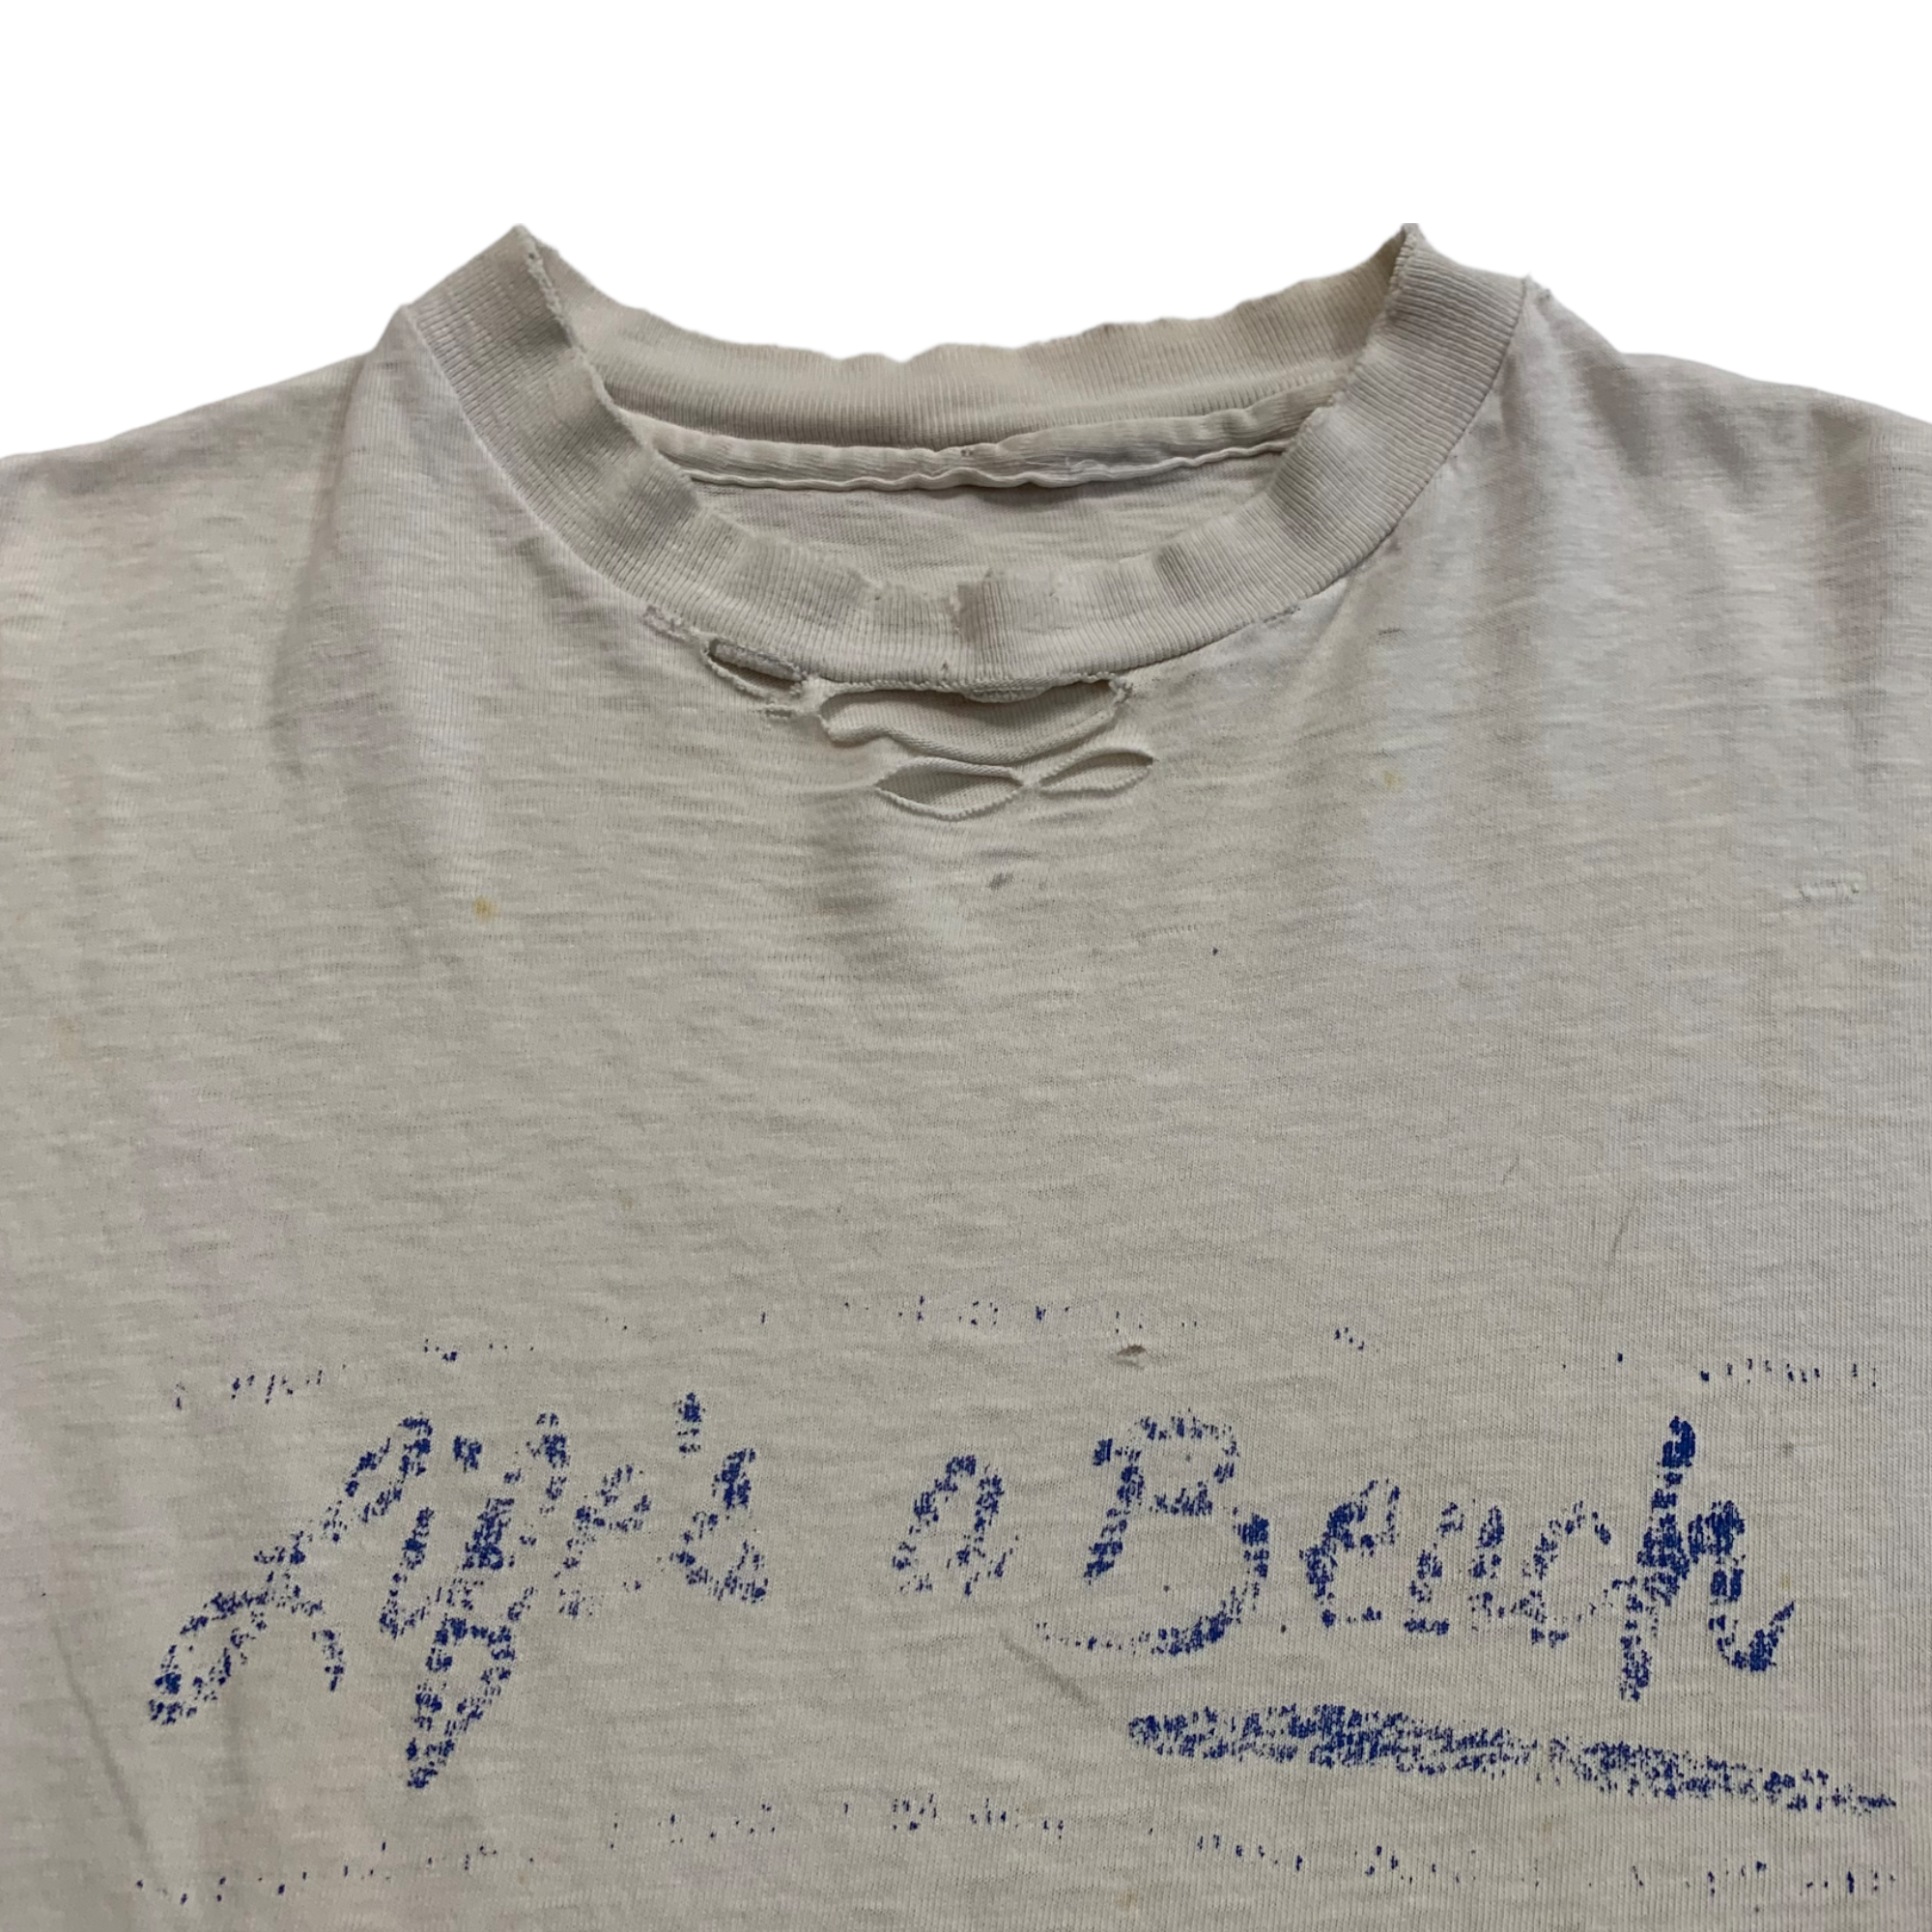 80s Life’s a Beach Thrashed T-Shirt - Cream/Aged White - S